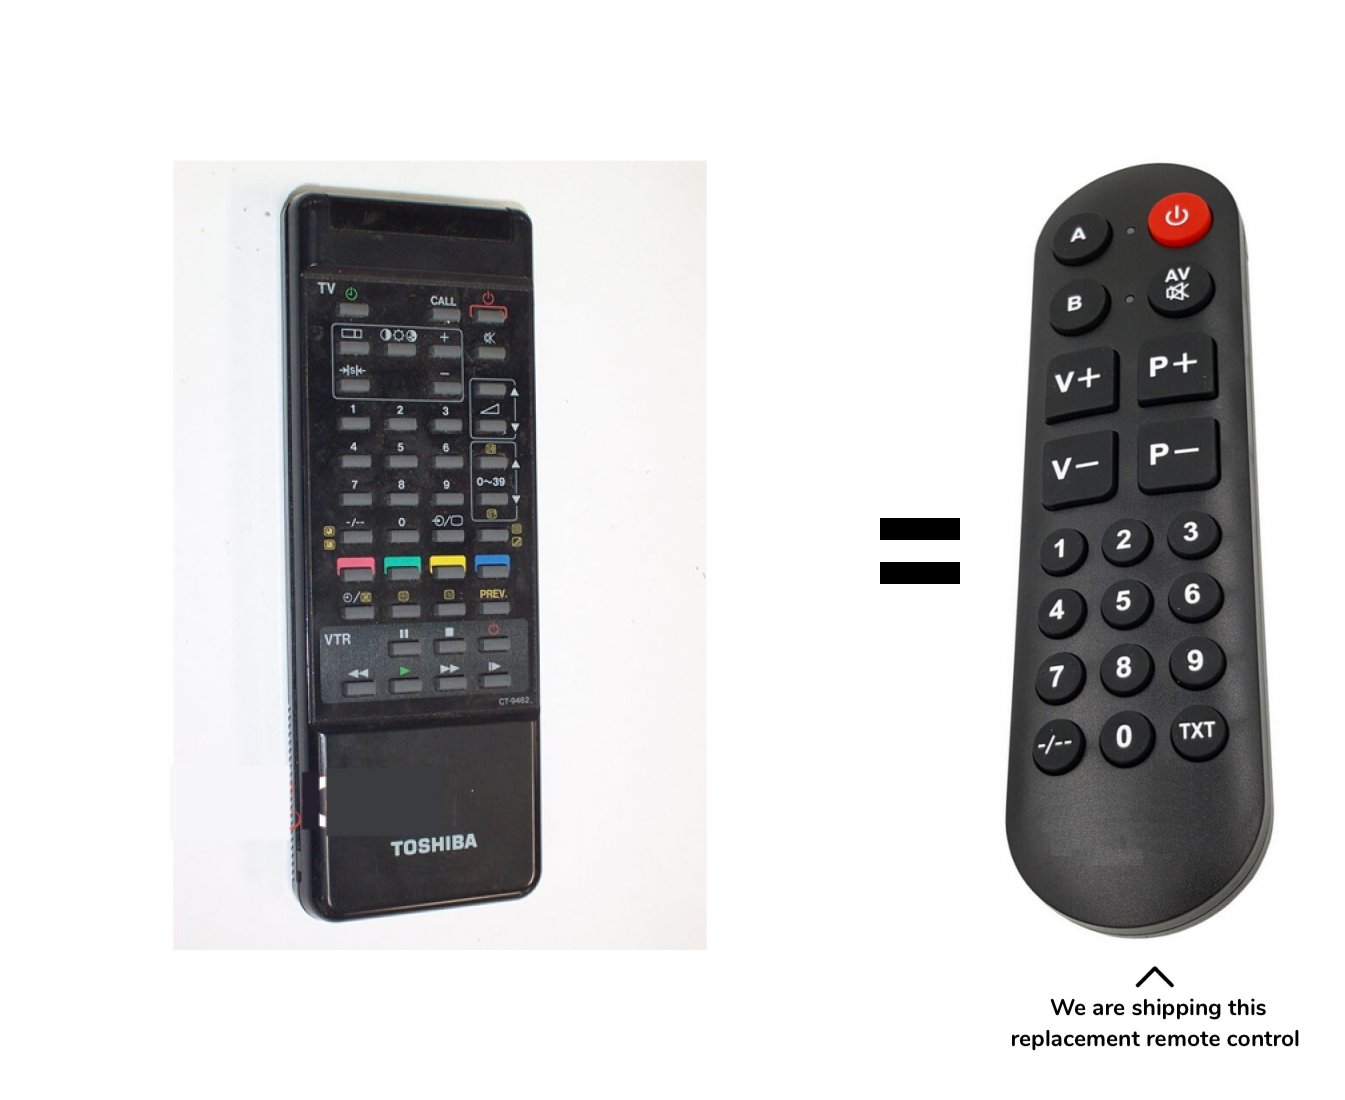 Toshiba CT-9434 remote control for seniors